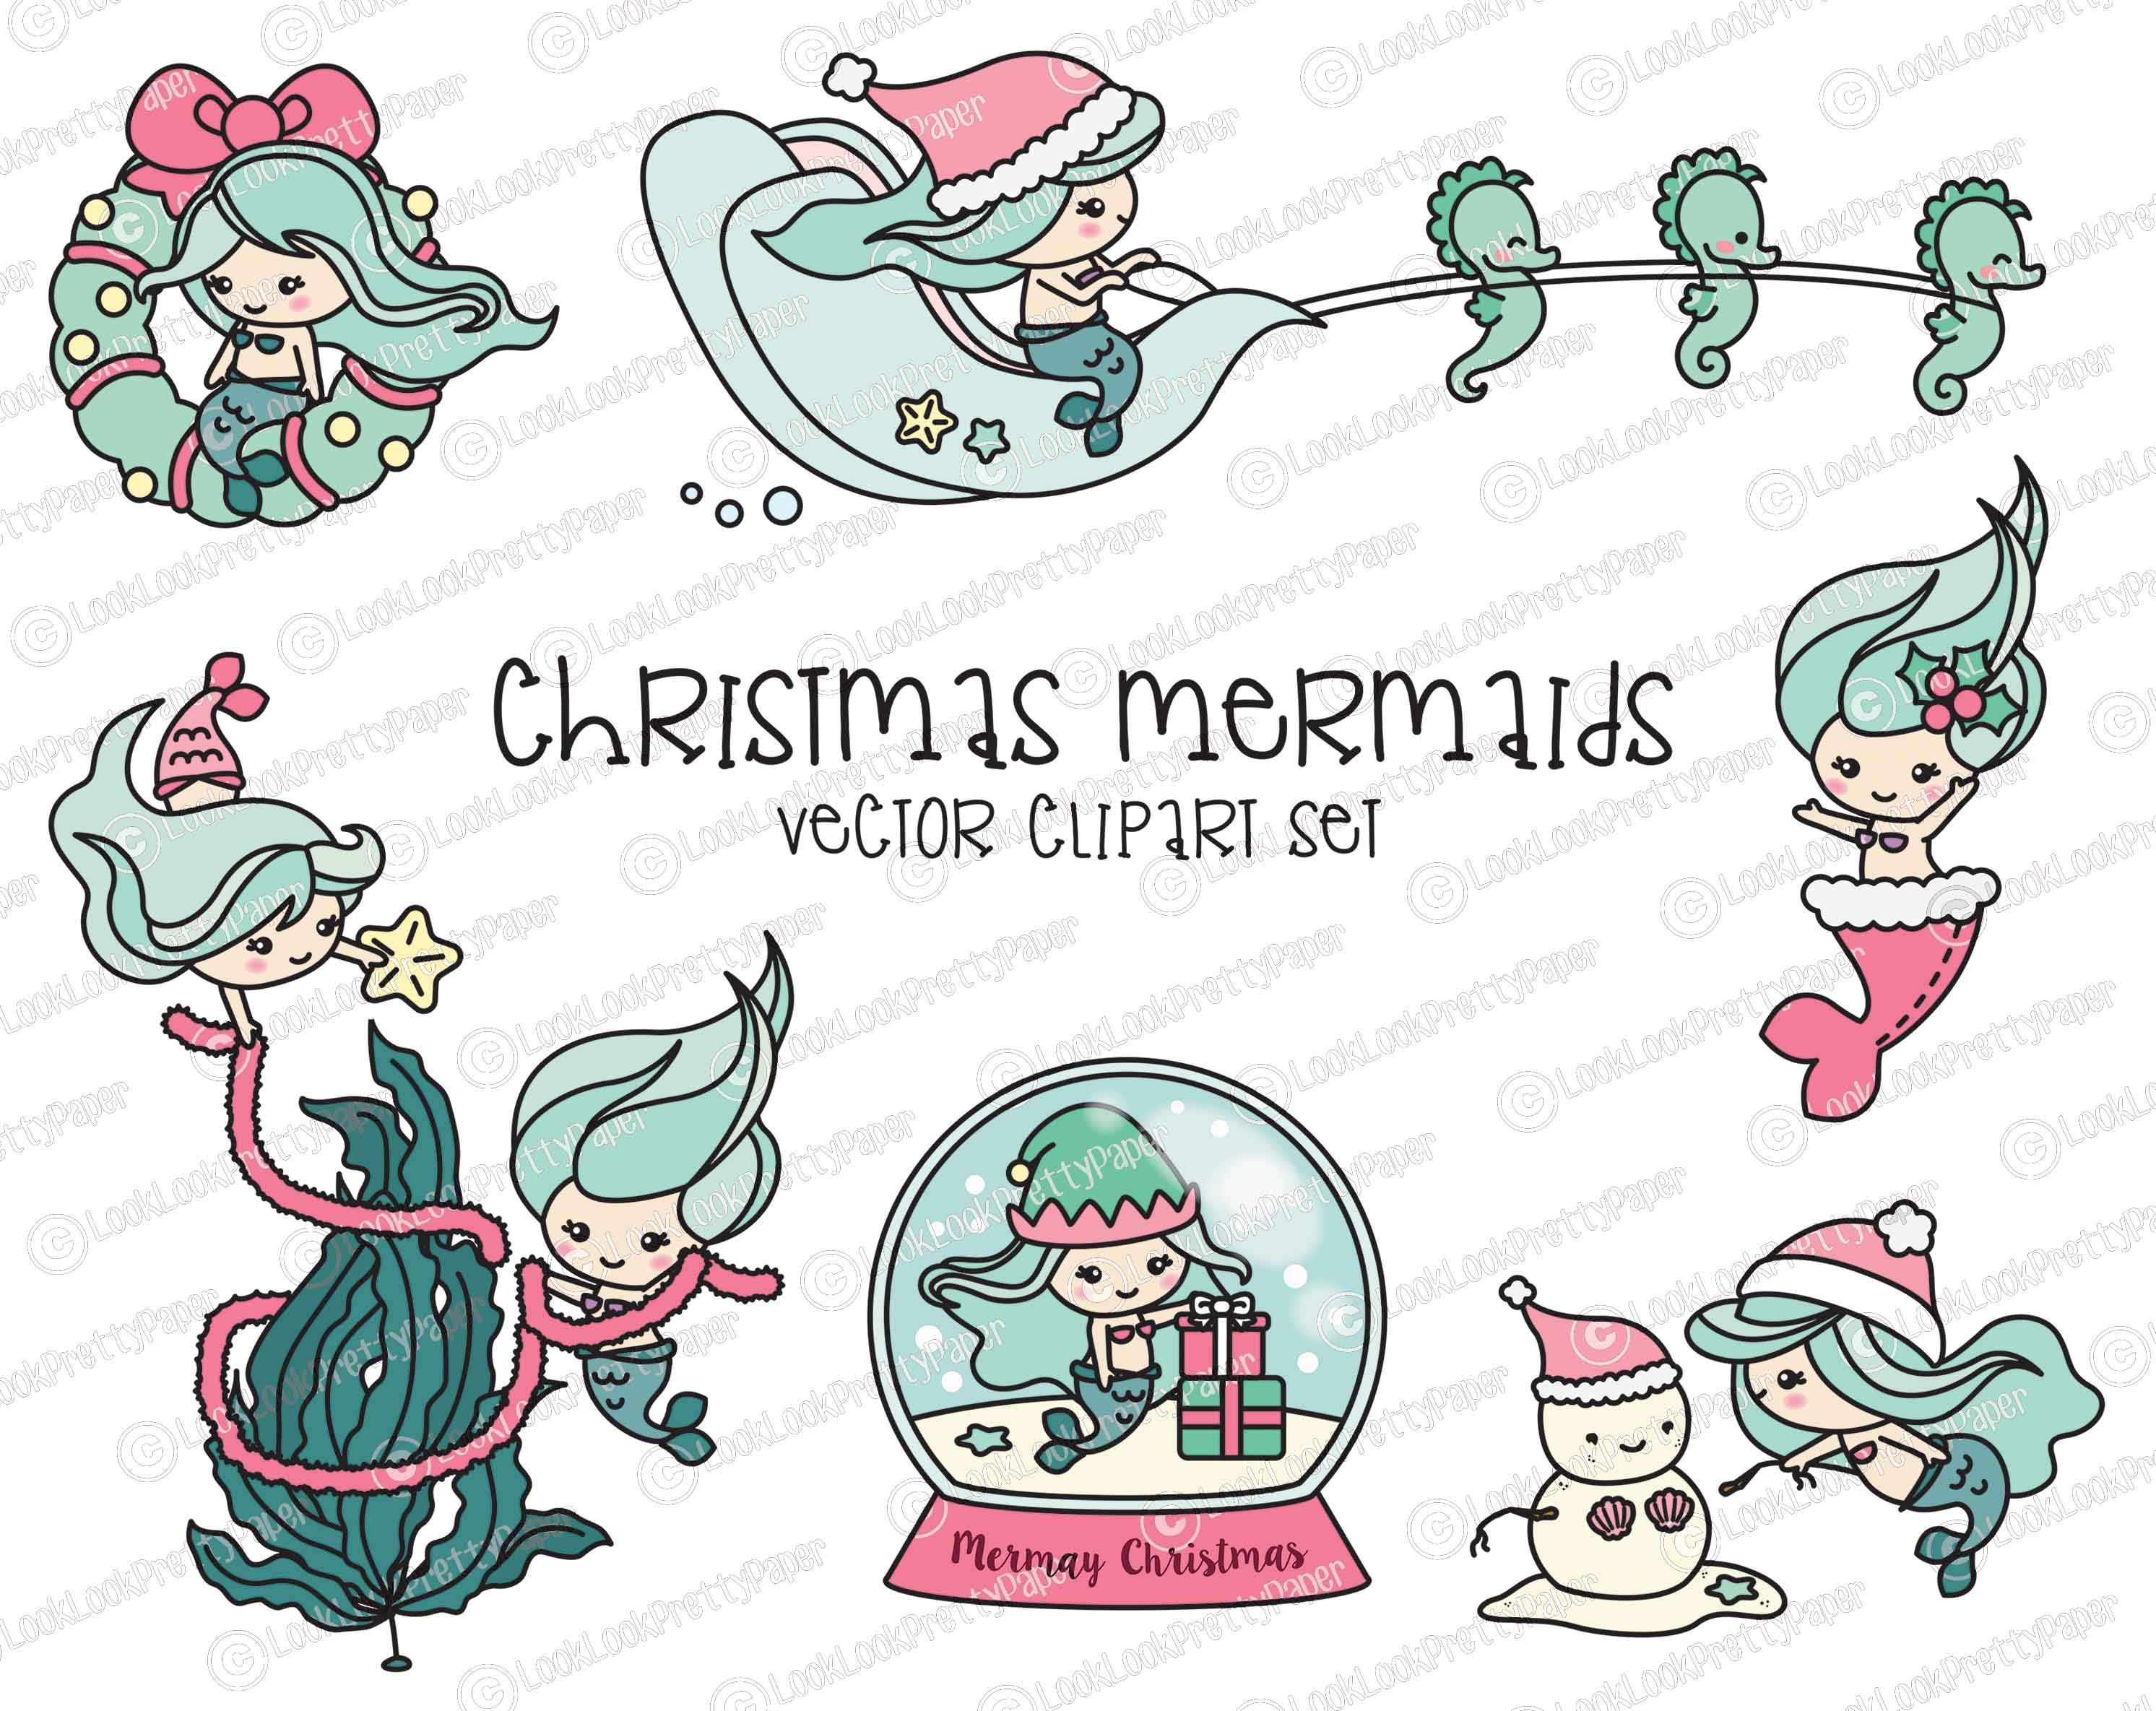 Download Premium Vector Clipart Kawaii Christmas Mermaids Cute